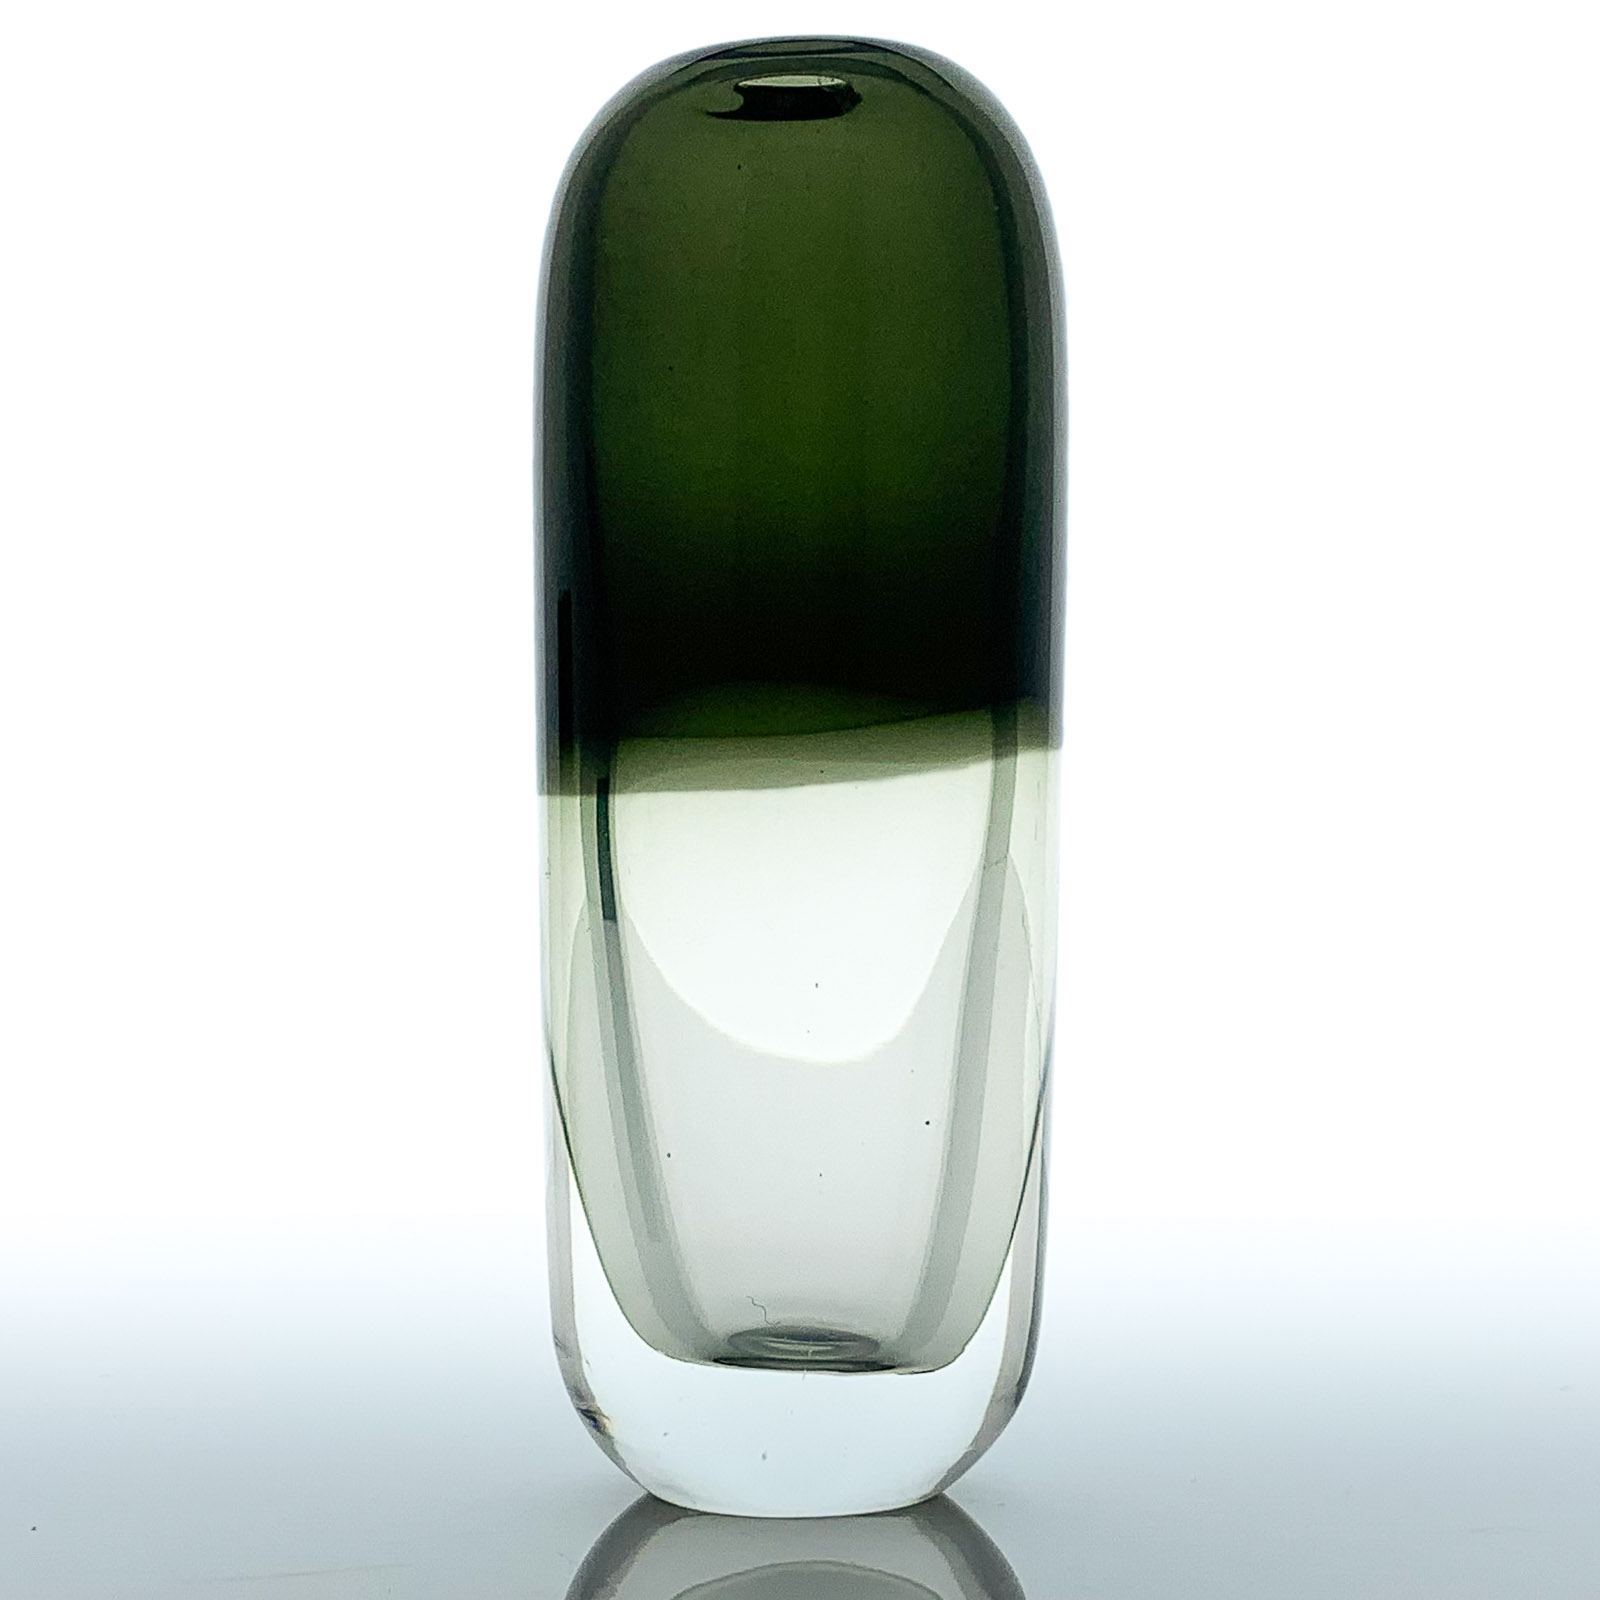 Timo Sarpaneva - Green and clear glass art-object "Pilleri", model 3599 - Iittala, Finland 1957